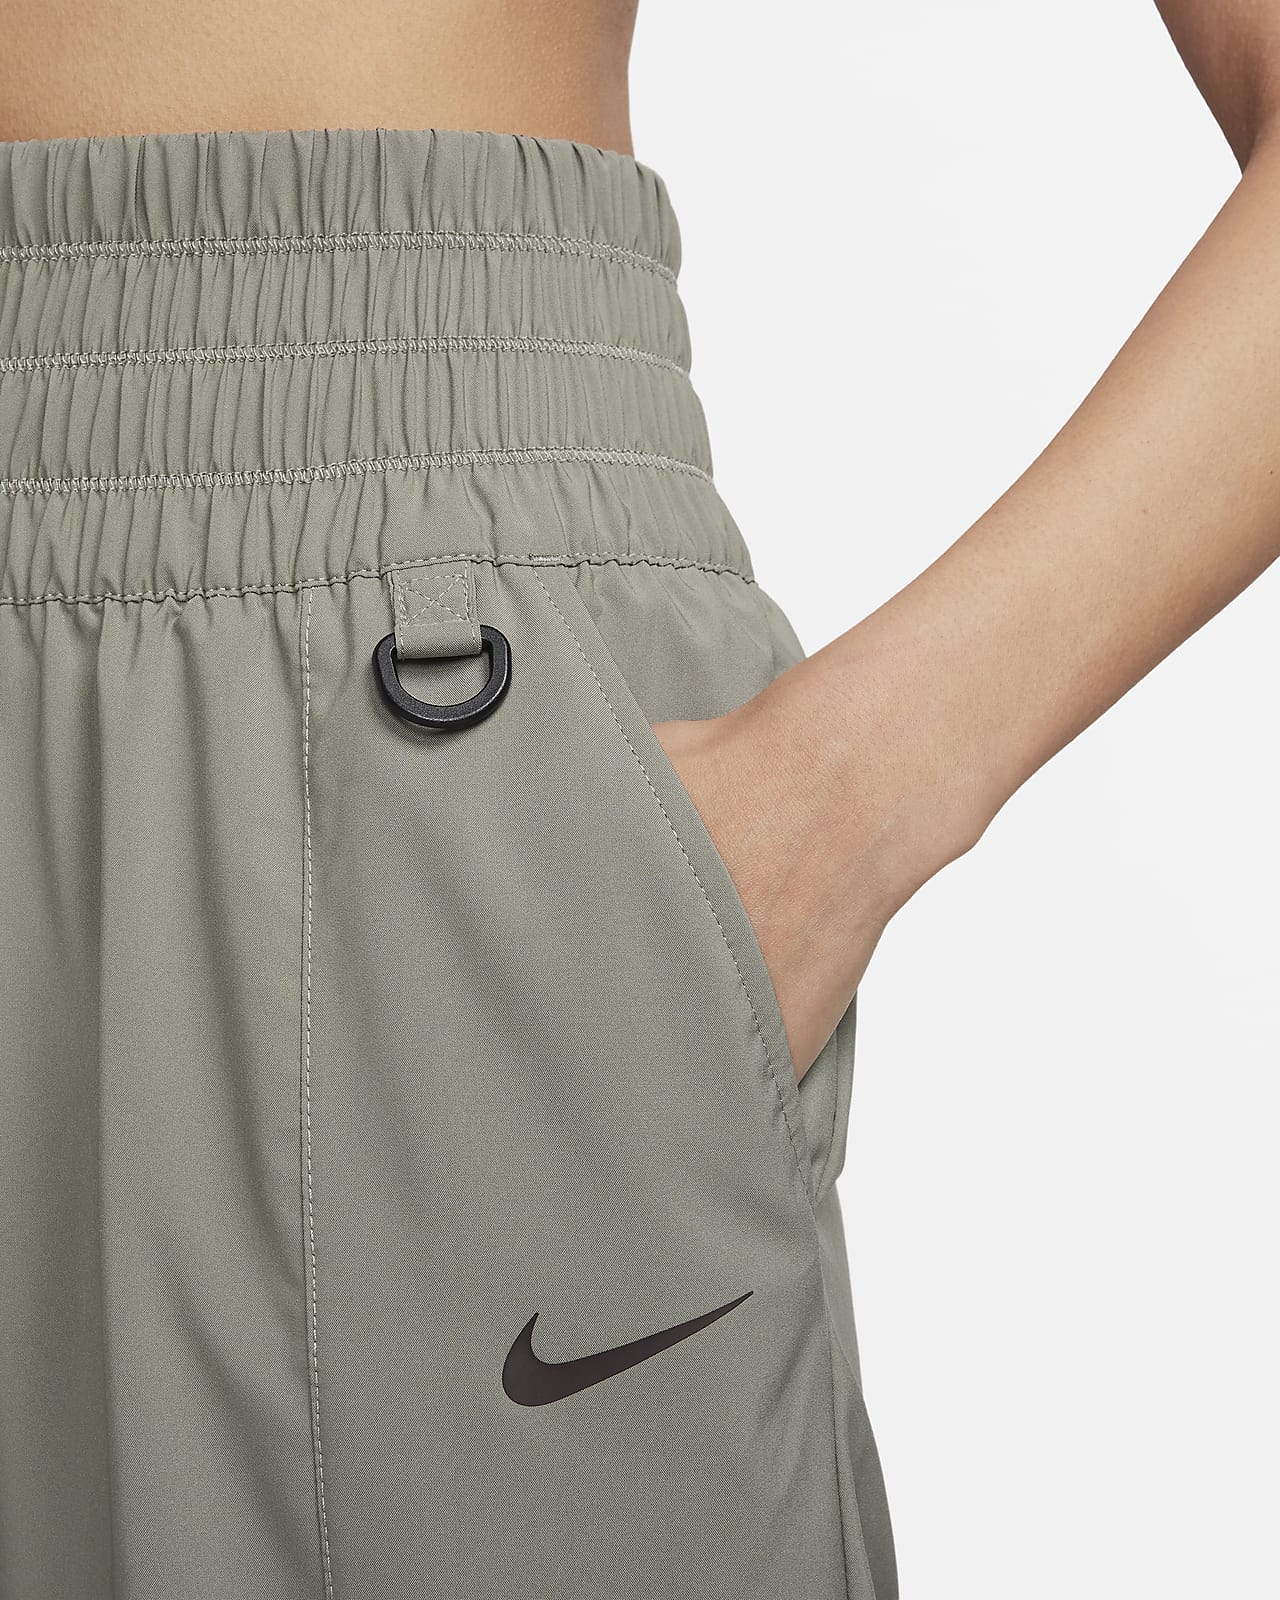 Nike Dri-FIT One Women's Ultra High-Waisted Trousers